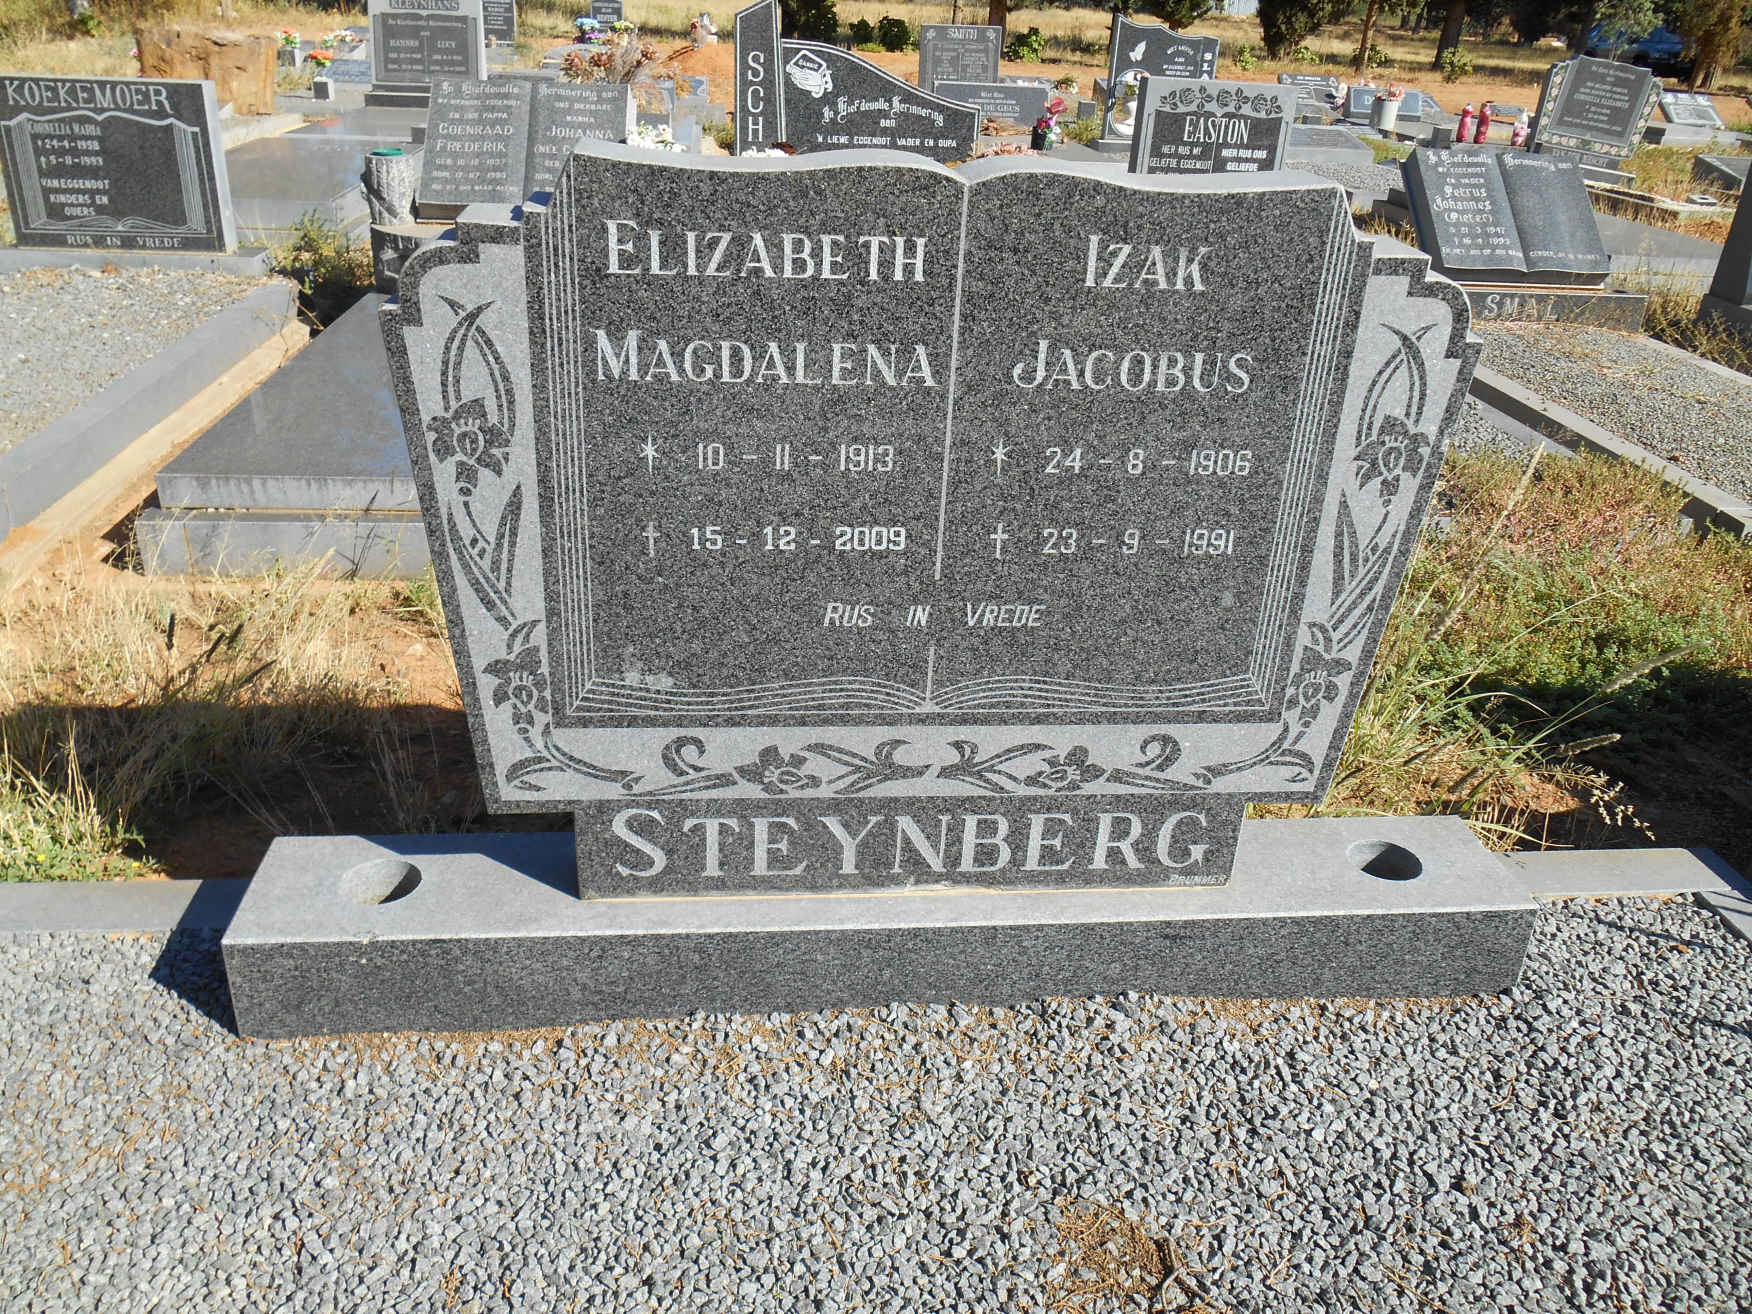 STEYNBERG Izak Jacobus 1906-1991 & Elizabeth Magdalena 1913-2009